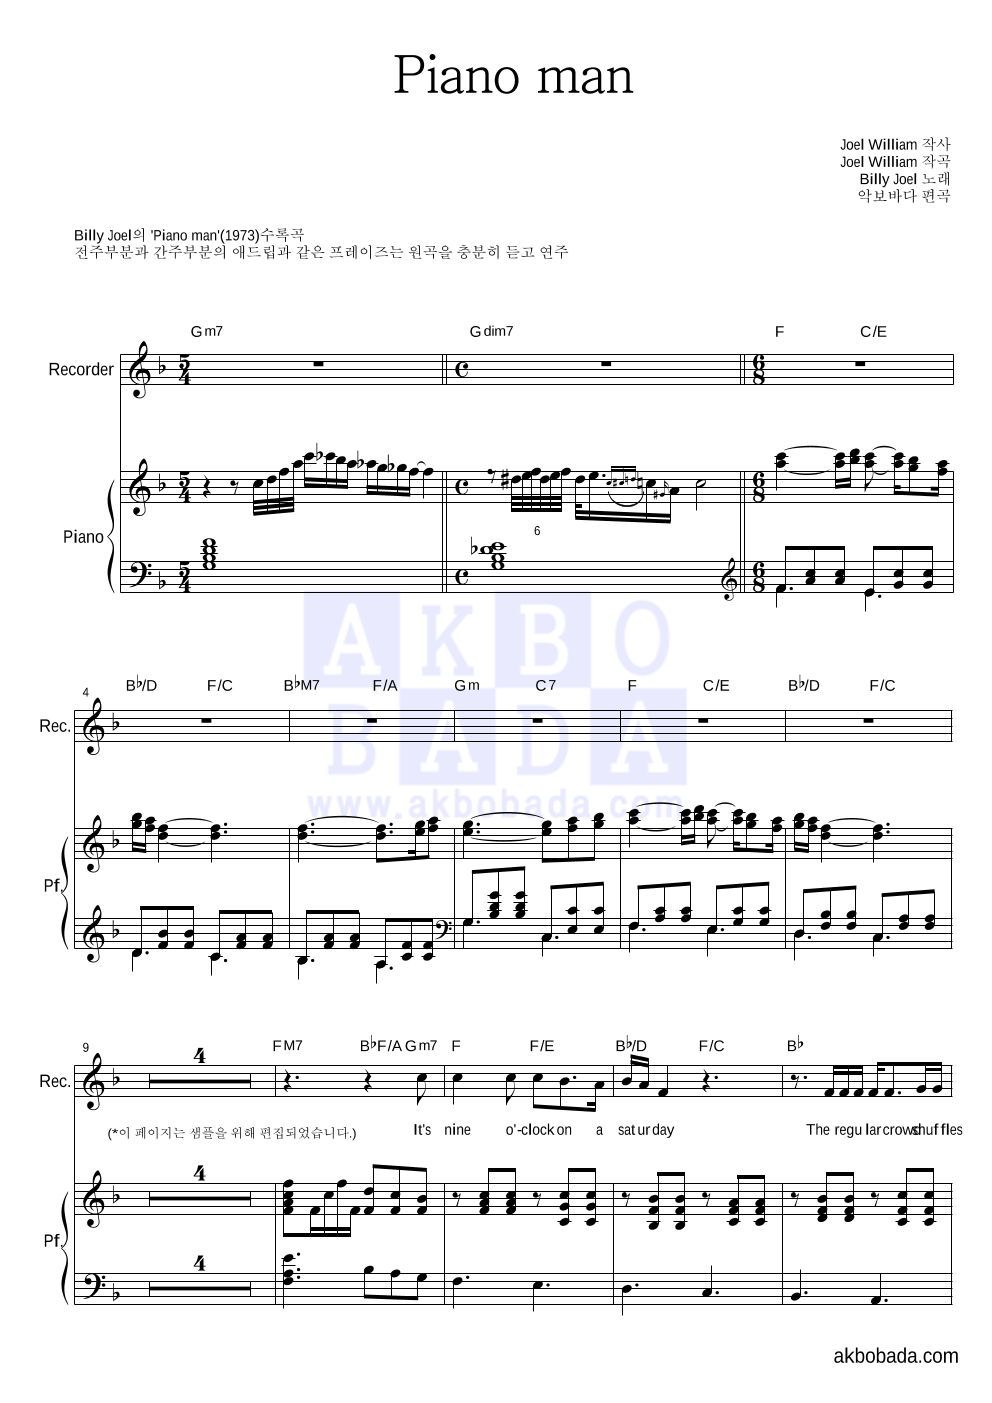 Billy Joel - Piano man 리코더&피아노 악보 